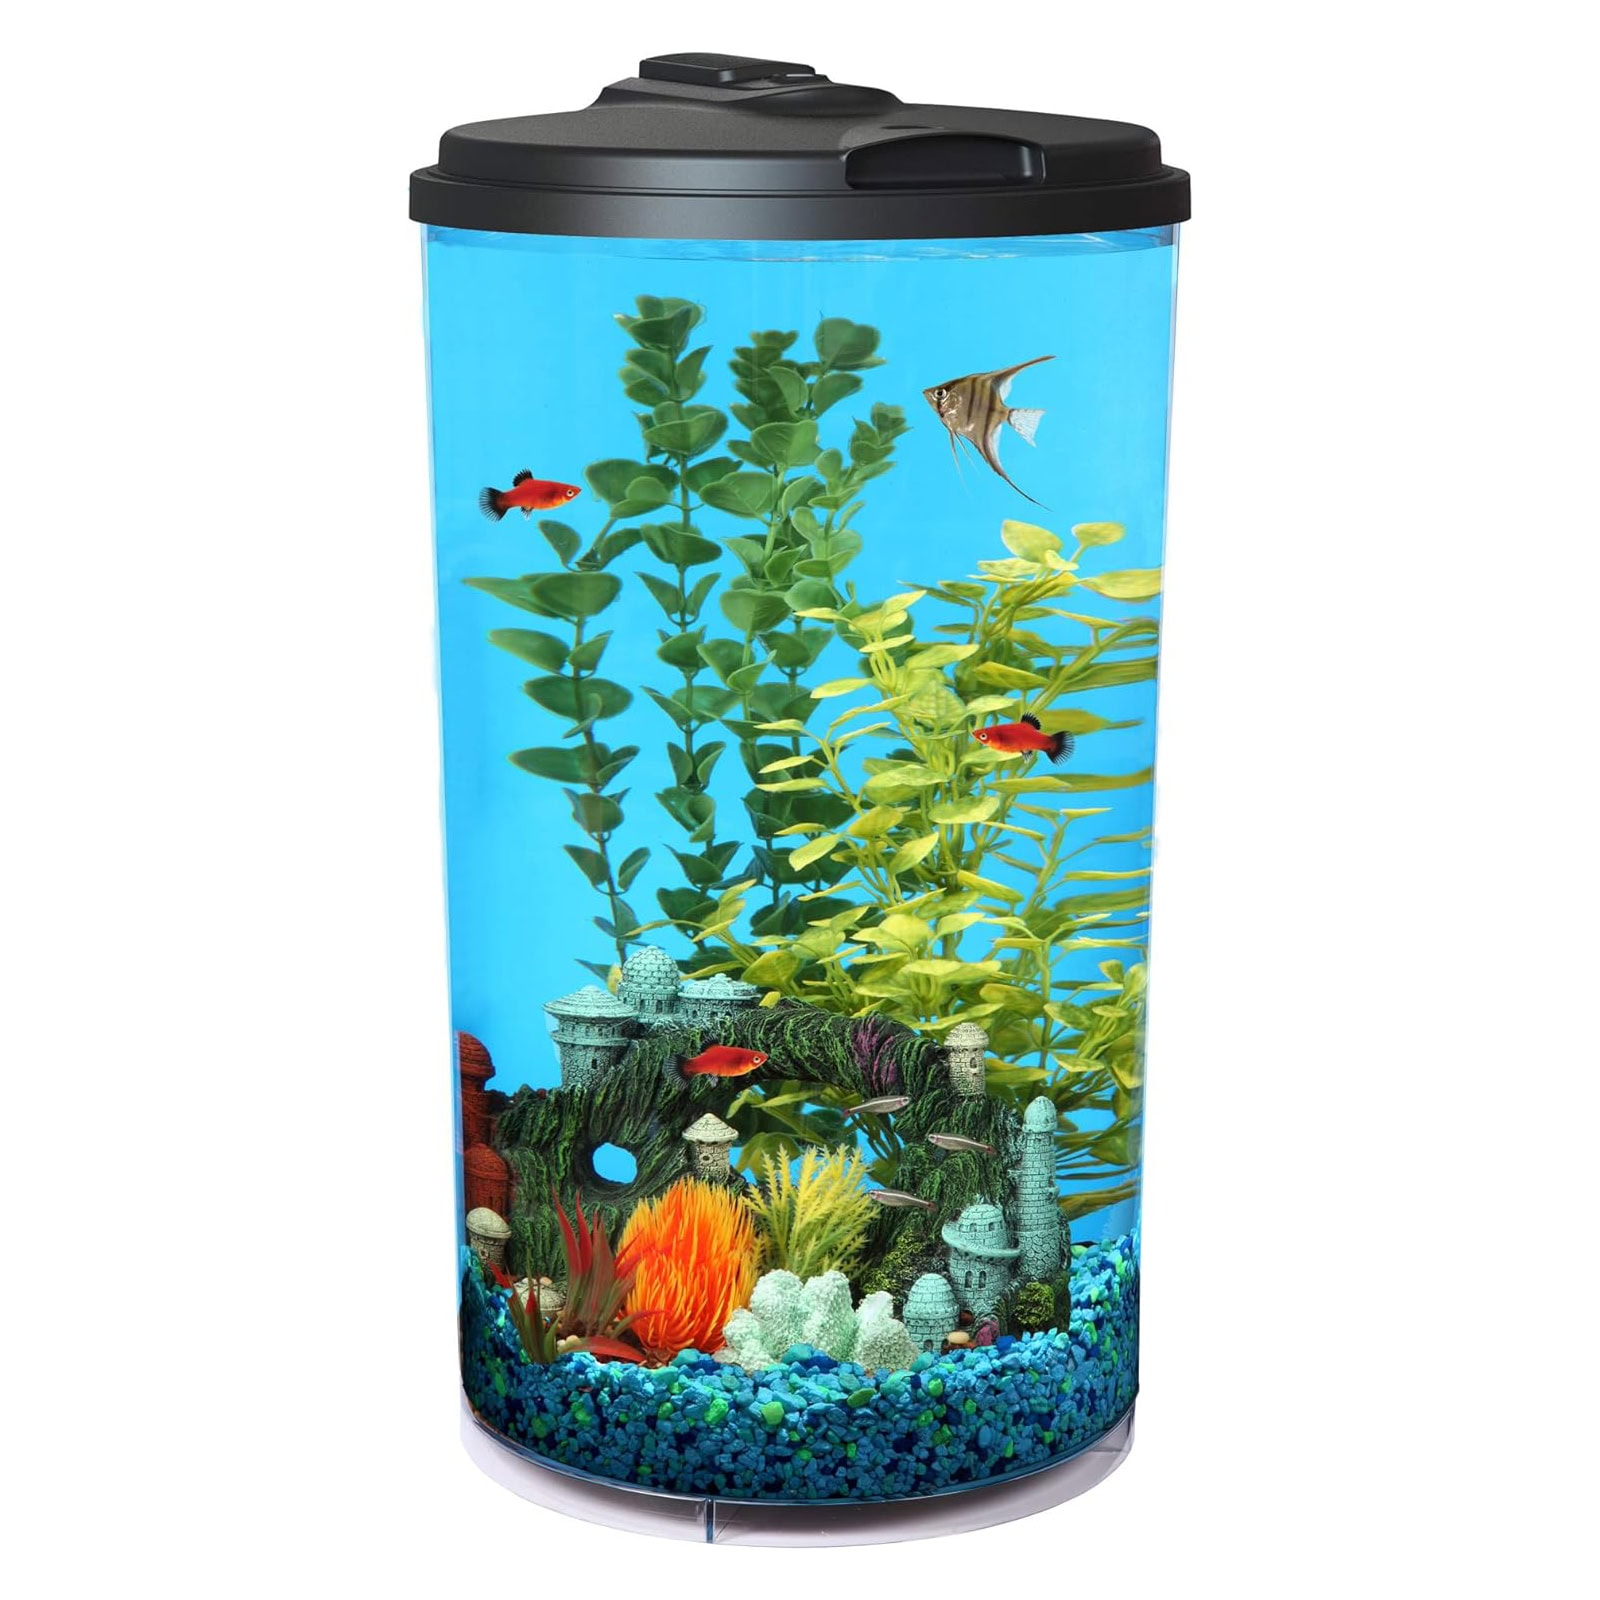 Koller Products Plastic 6-Gallon AquaView 360 Aquarium Kit